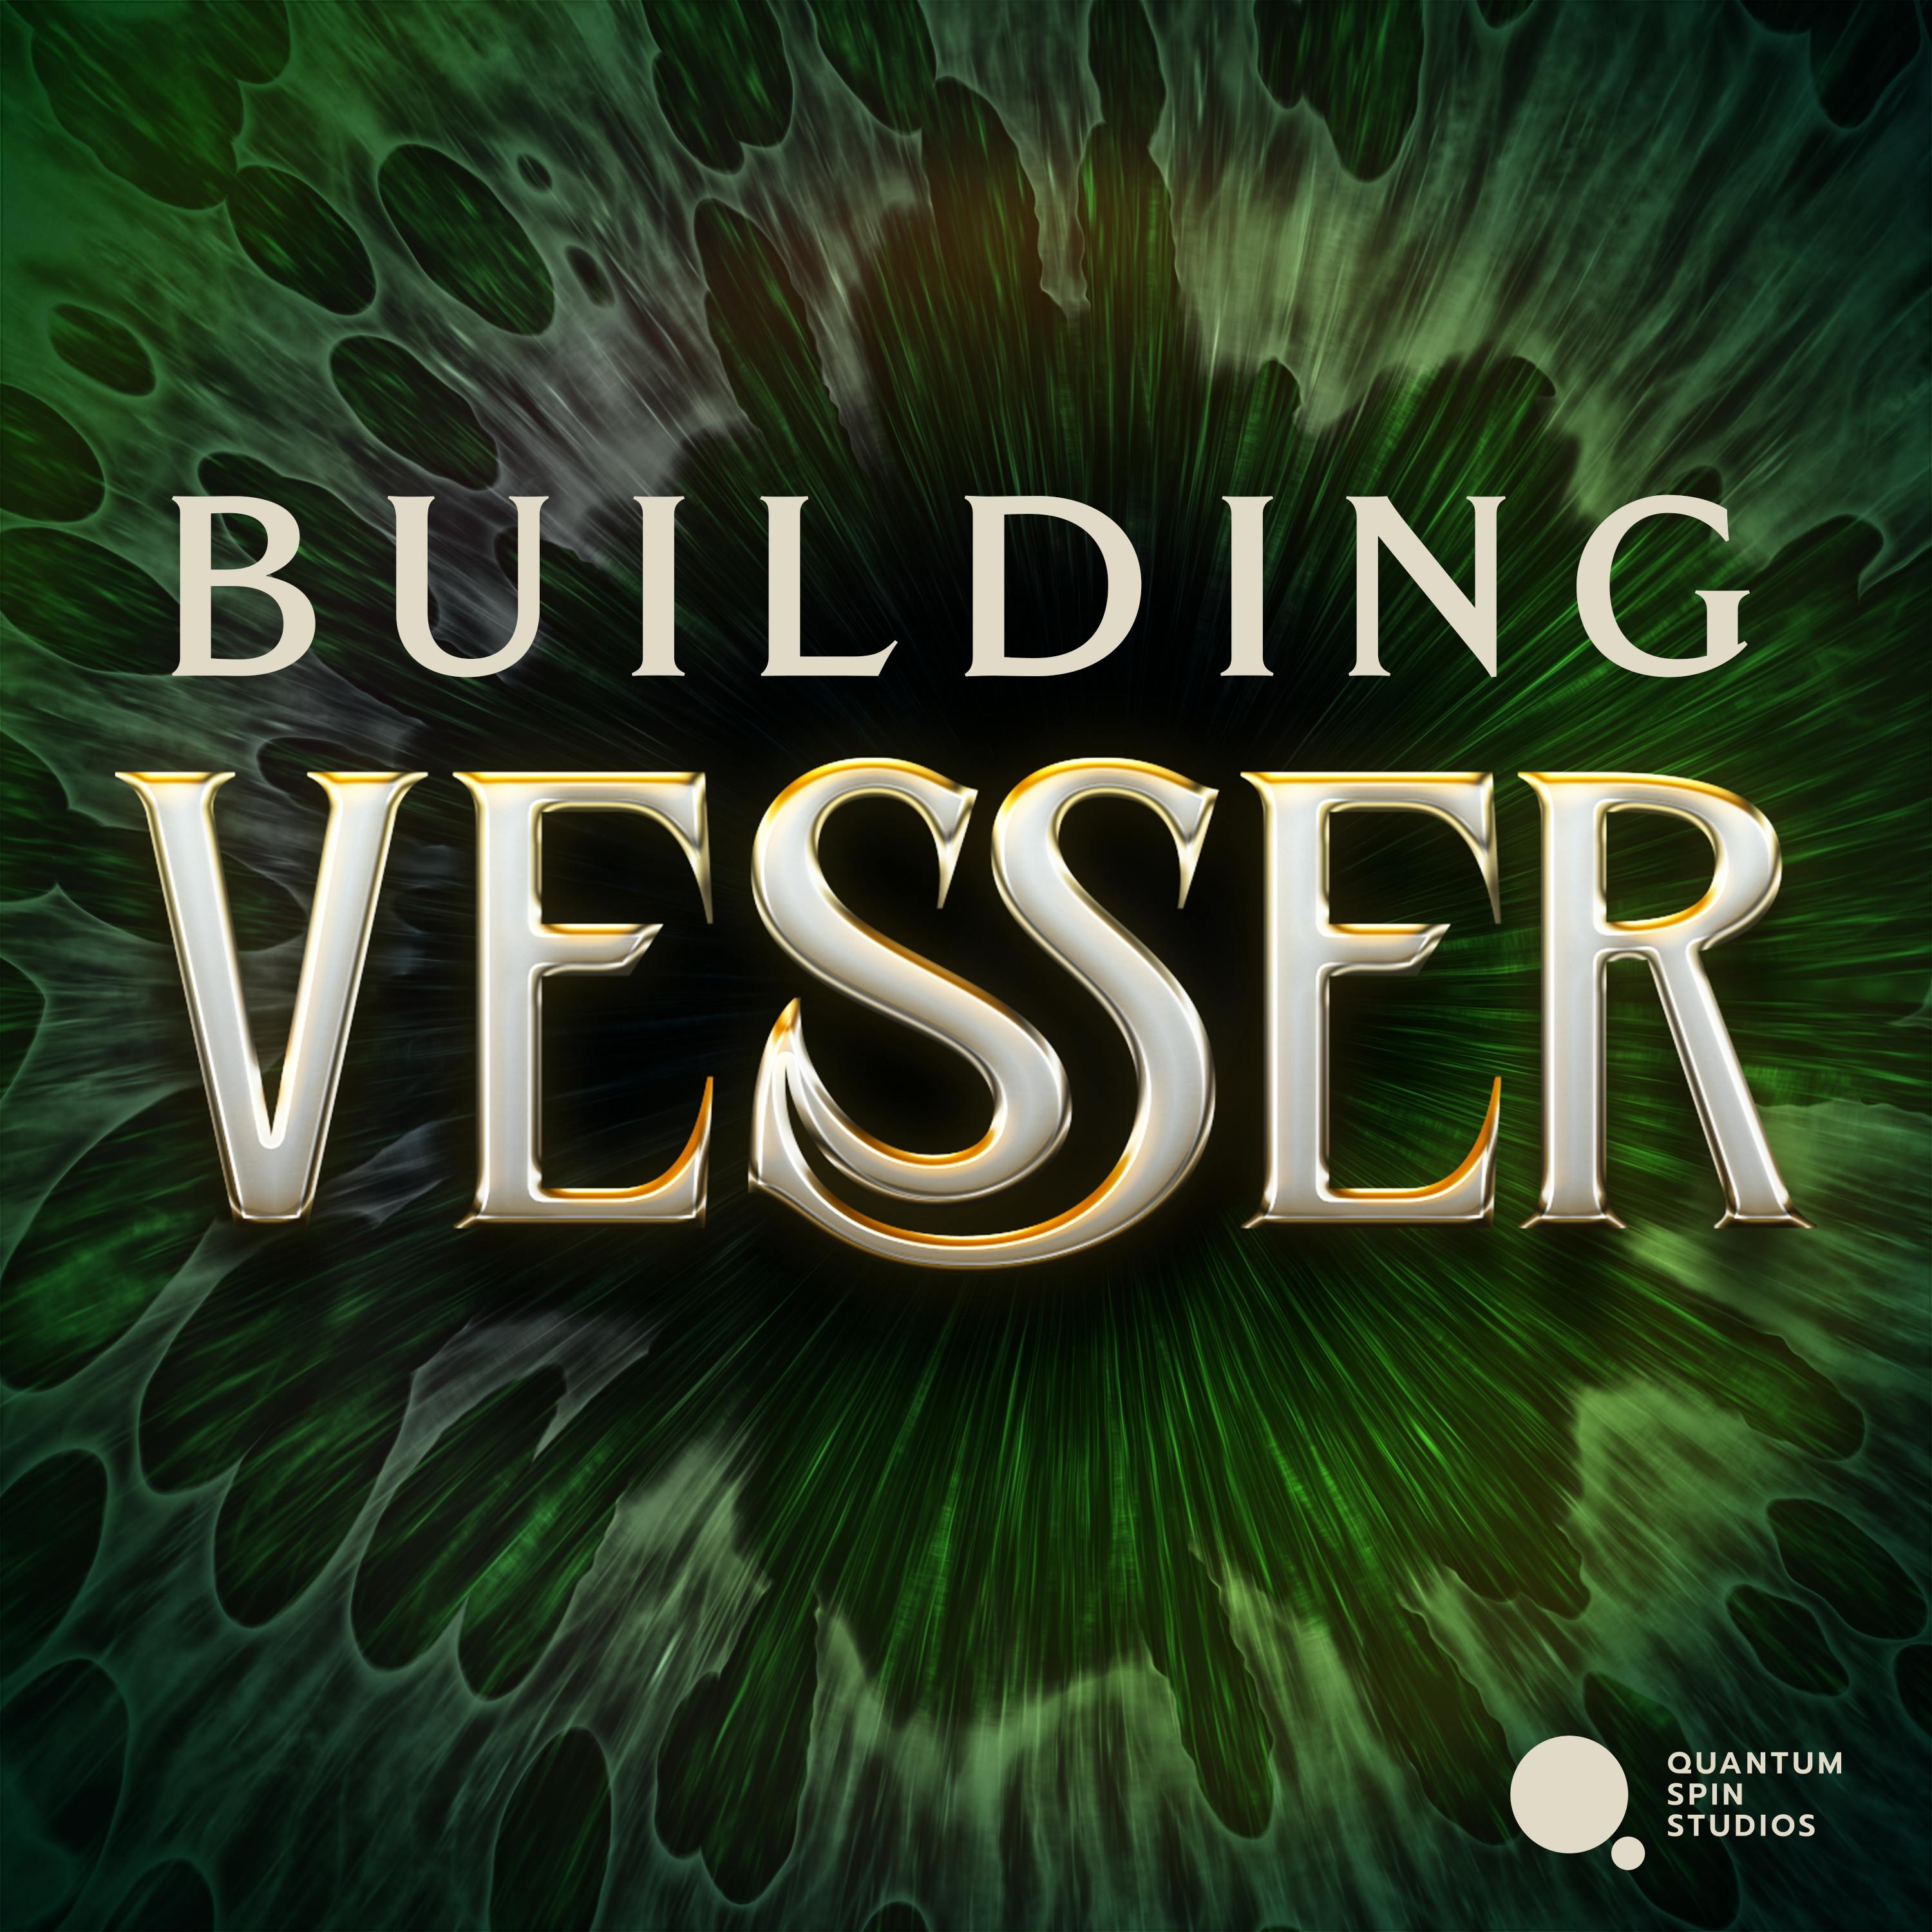 Building Vesser: Original Runzhé language and our model of physics